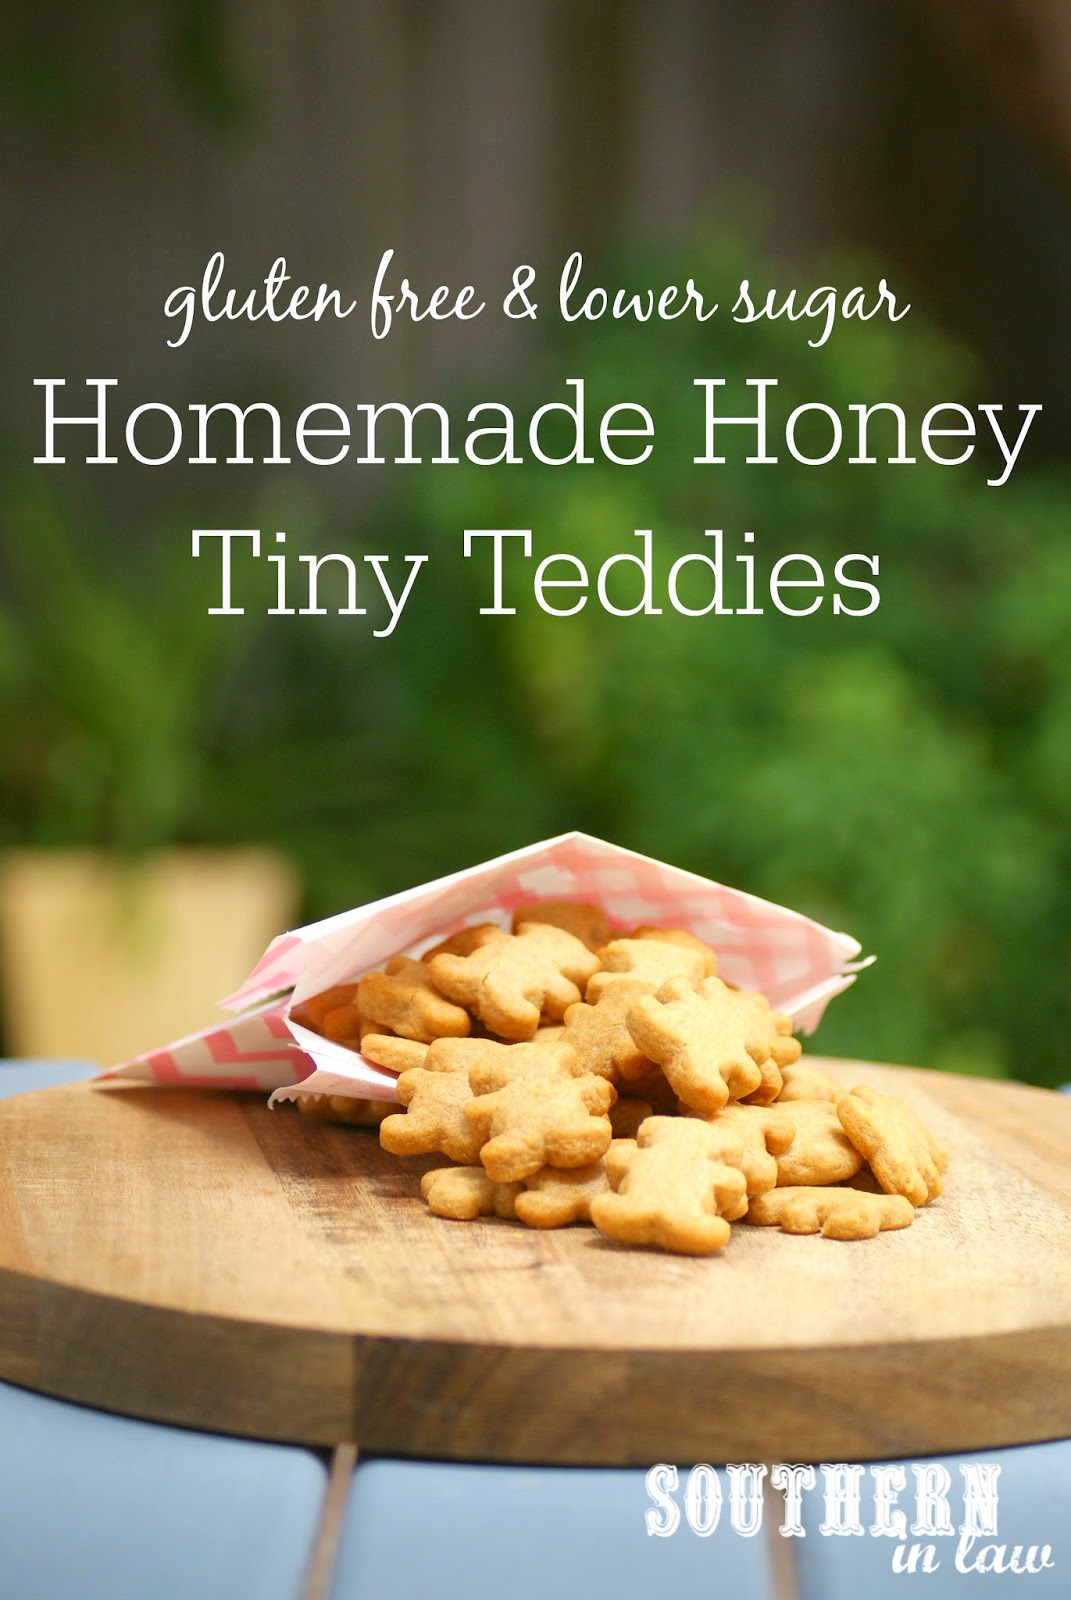 Homemade Honey Tiny Teddies Recipe - gluten free, nut free, egg free, healthy, low sugar